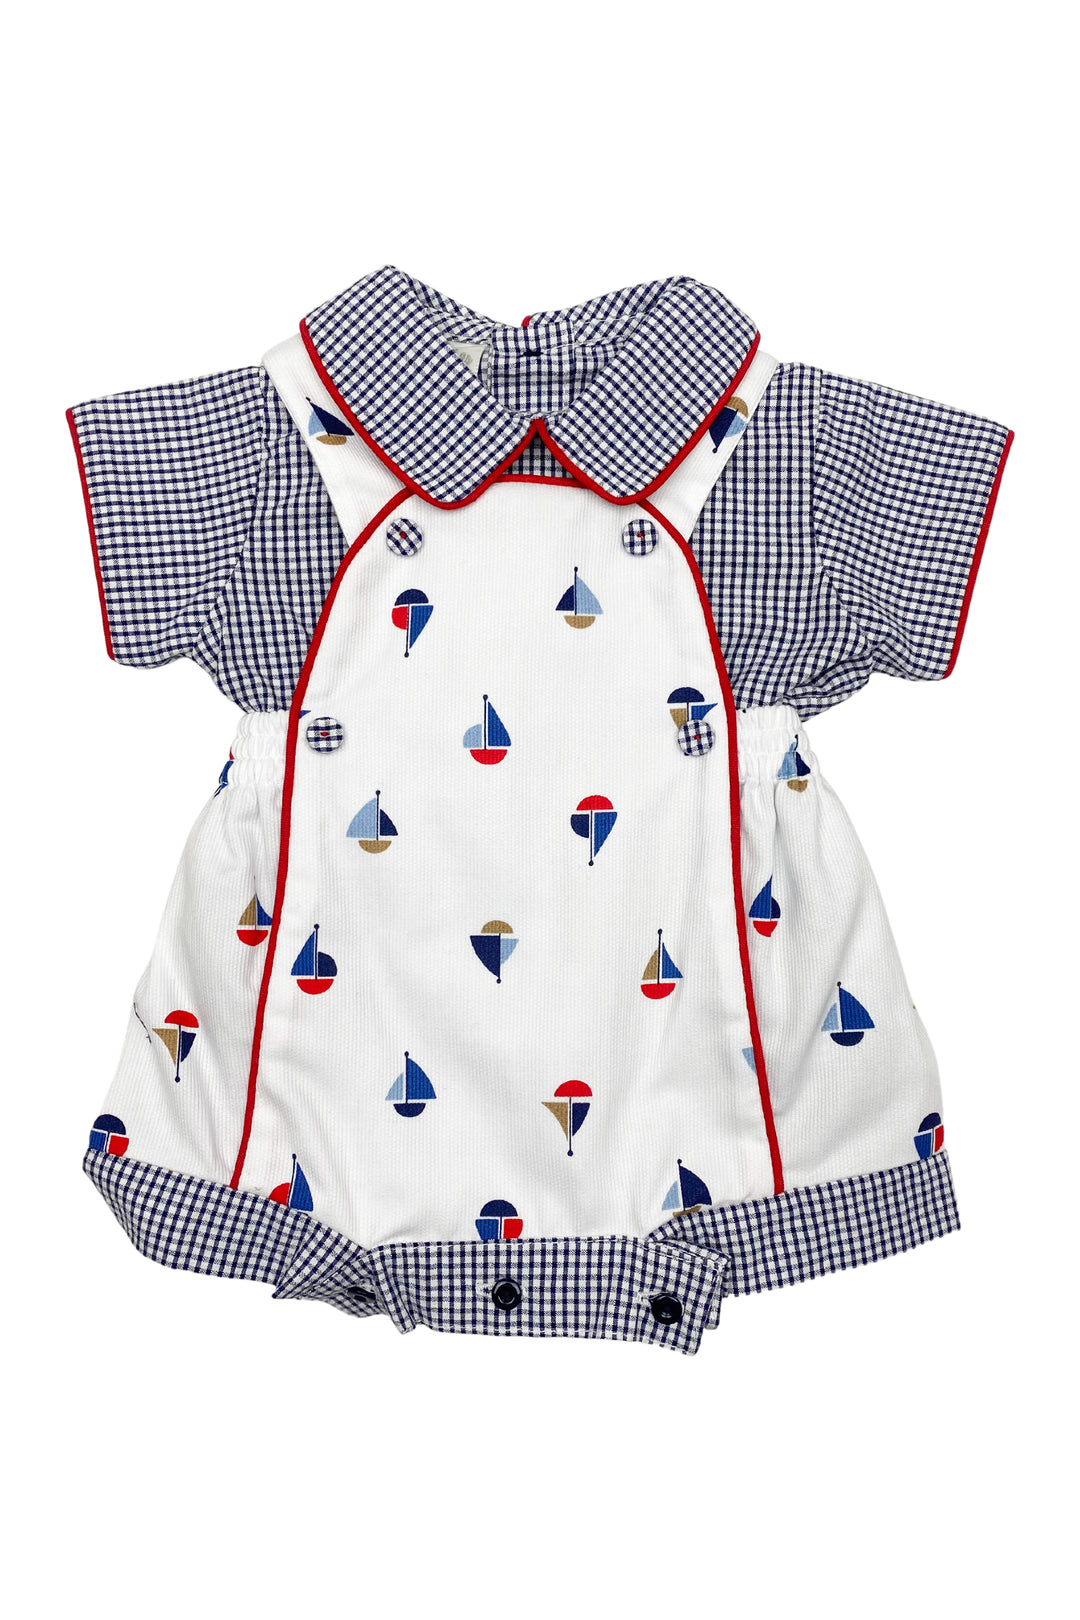 Pretty Originals "Florian" Navy Shirt & Sailboat Romper | Millie and John